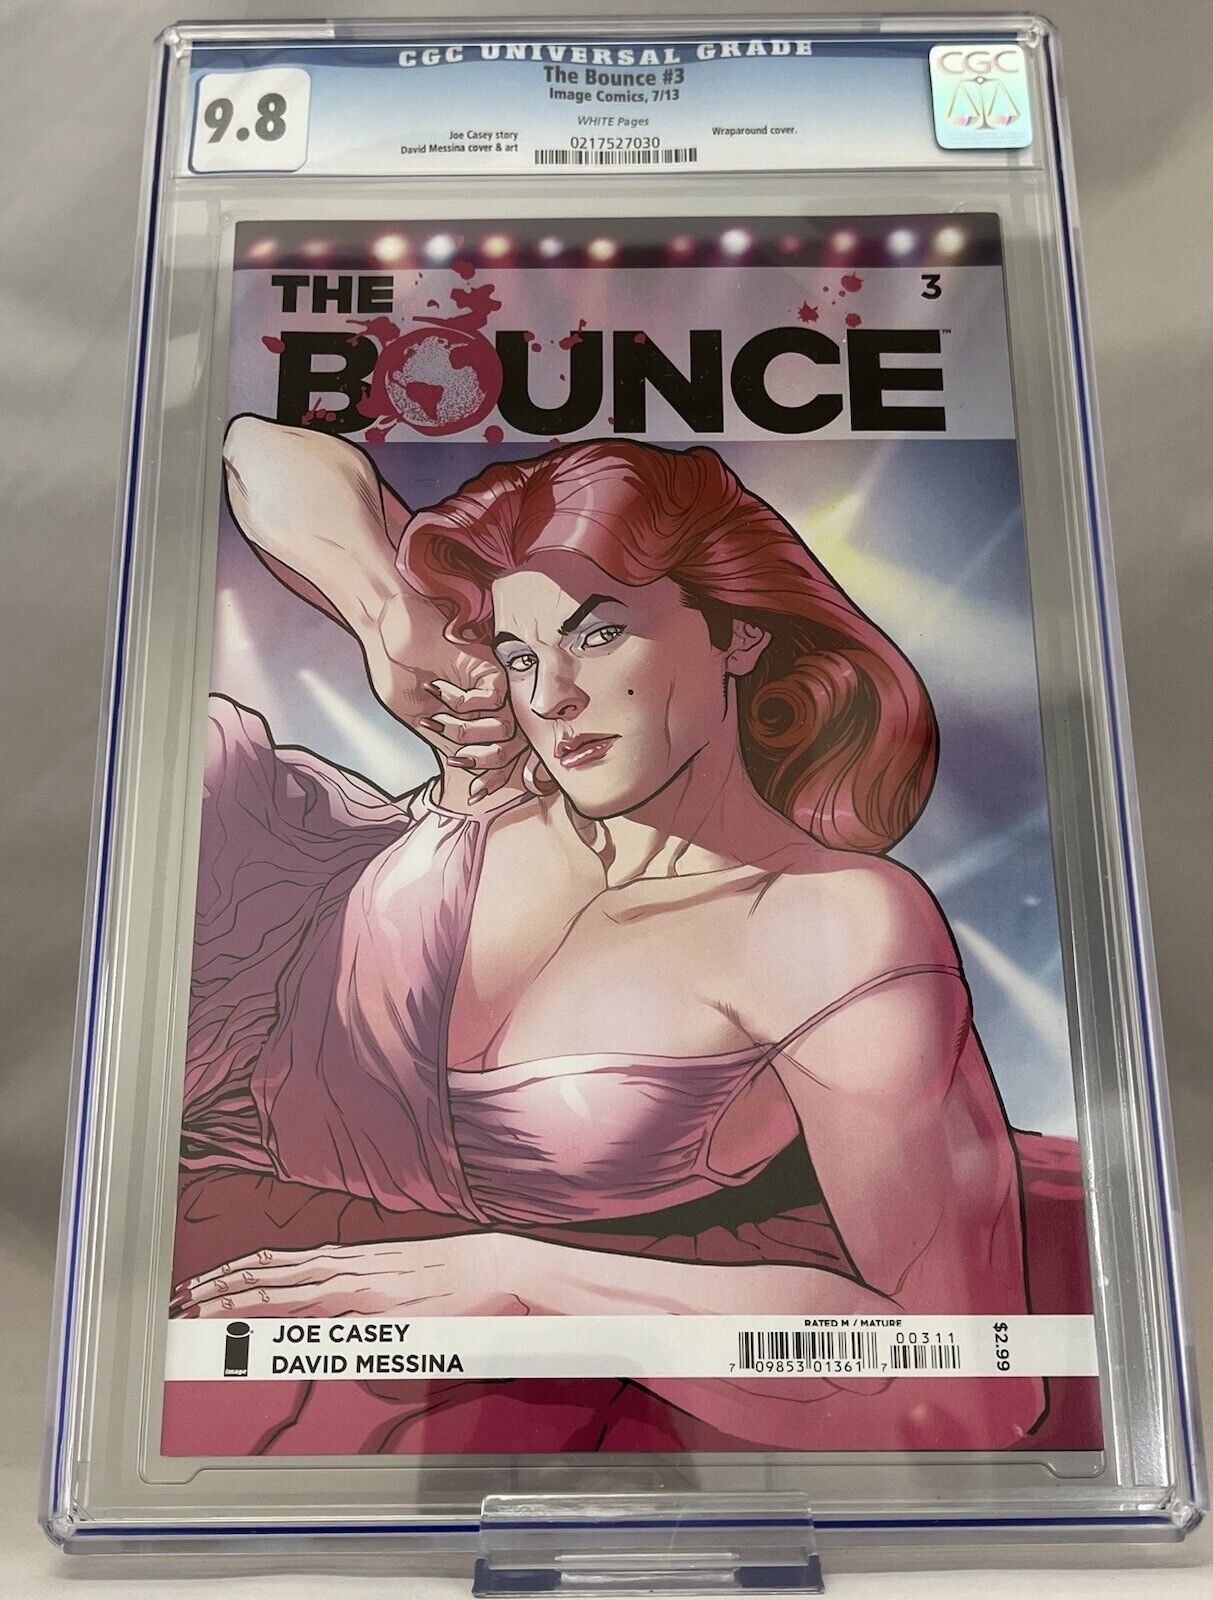 The Bounce #3 Image Comics, 7/13 Wraparound Cover CGC 9.8